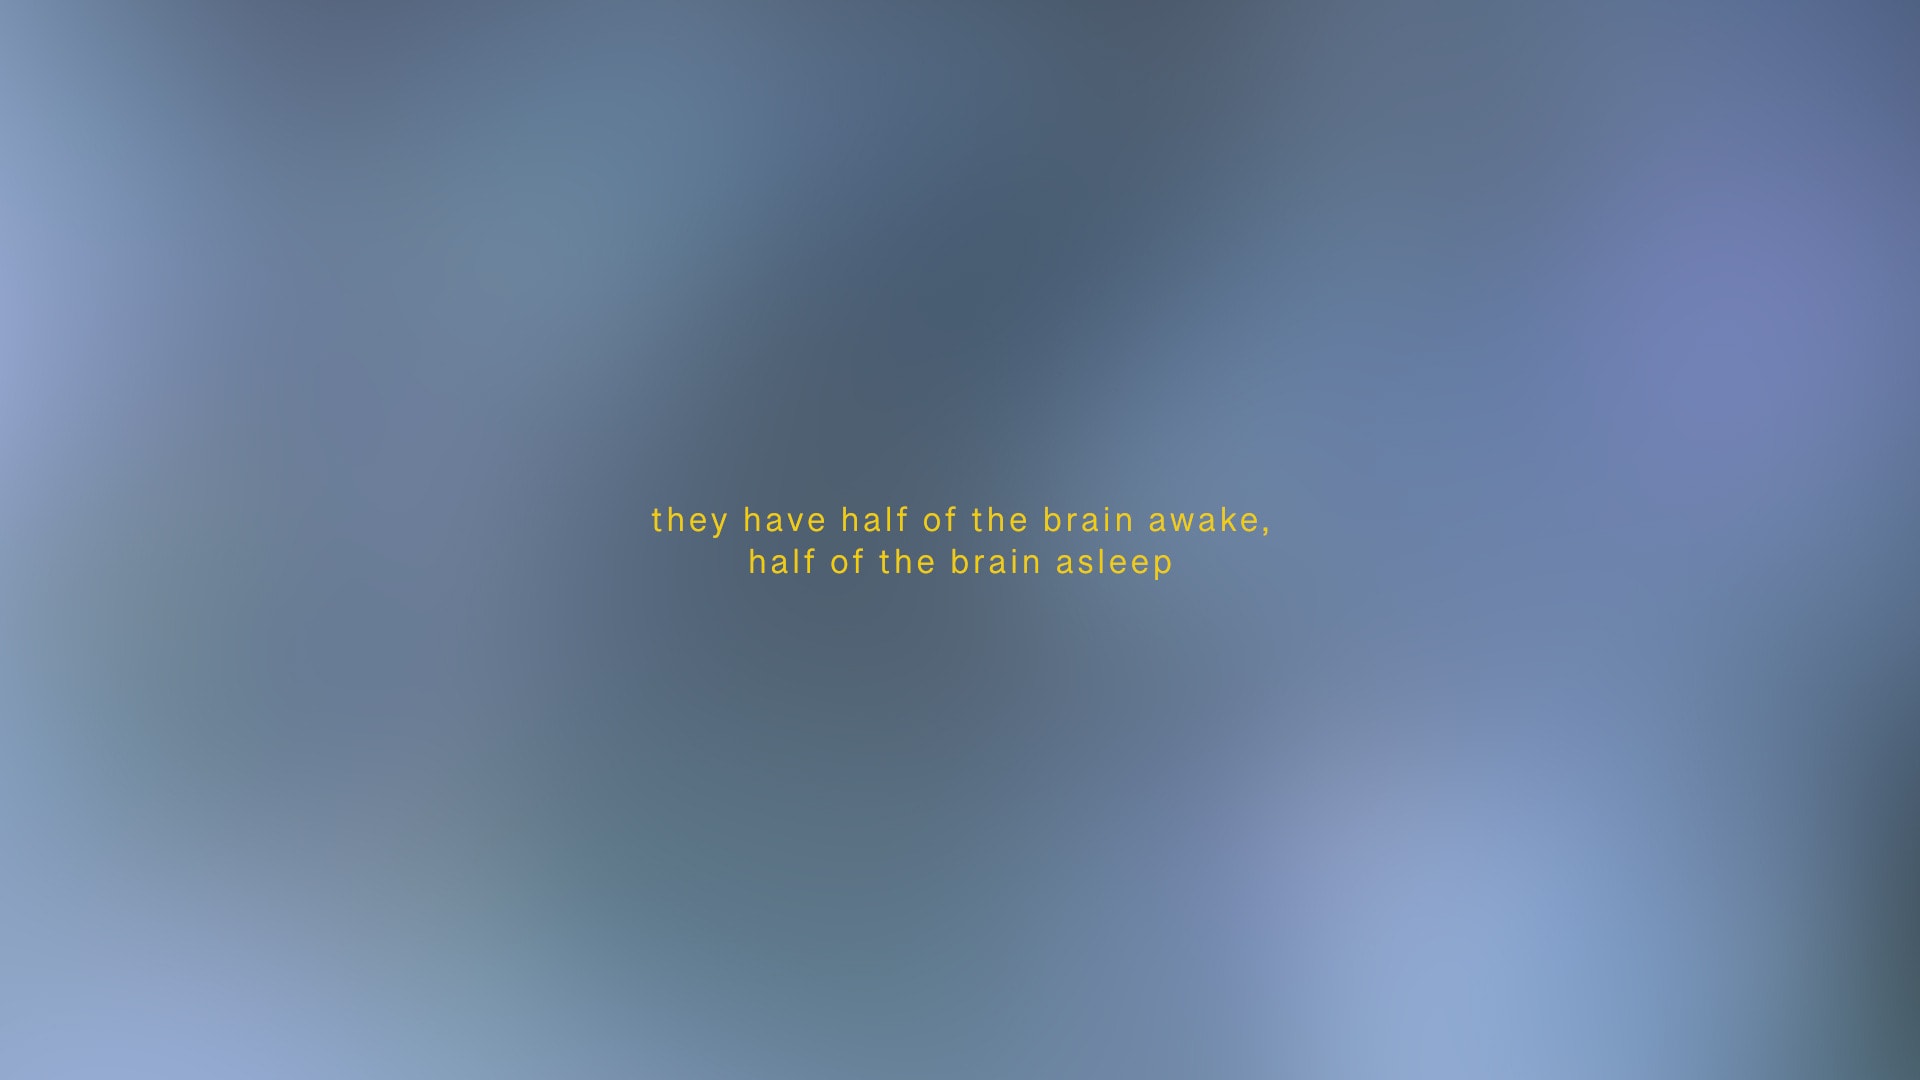 they have half of the brain awake, half of the brain asleep